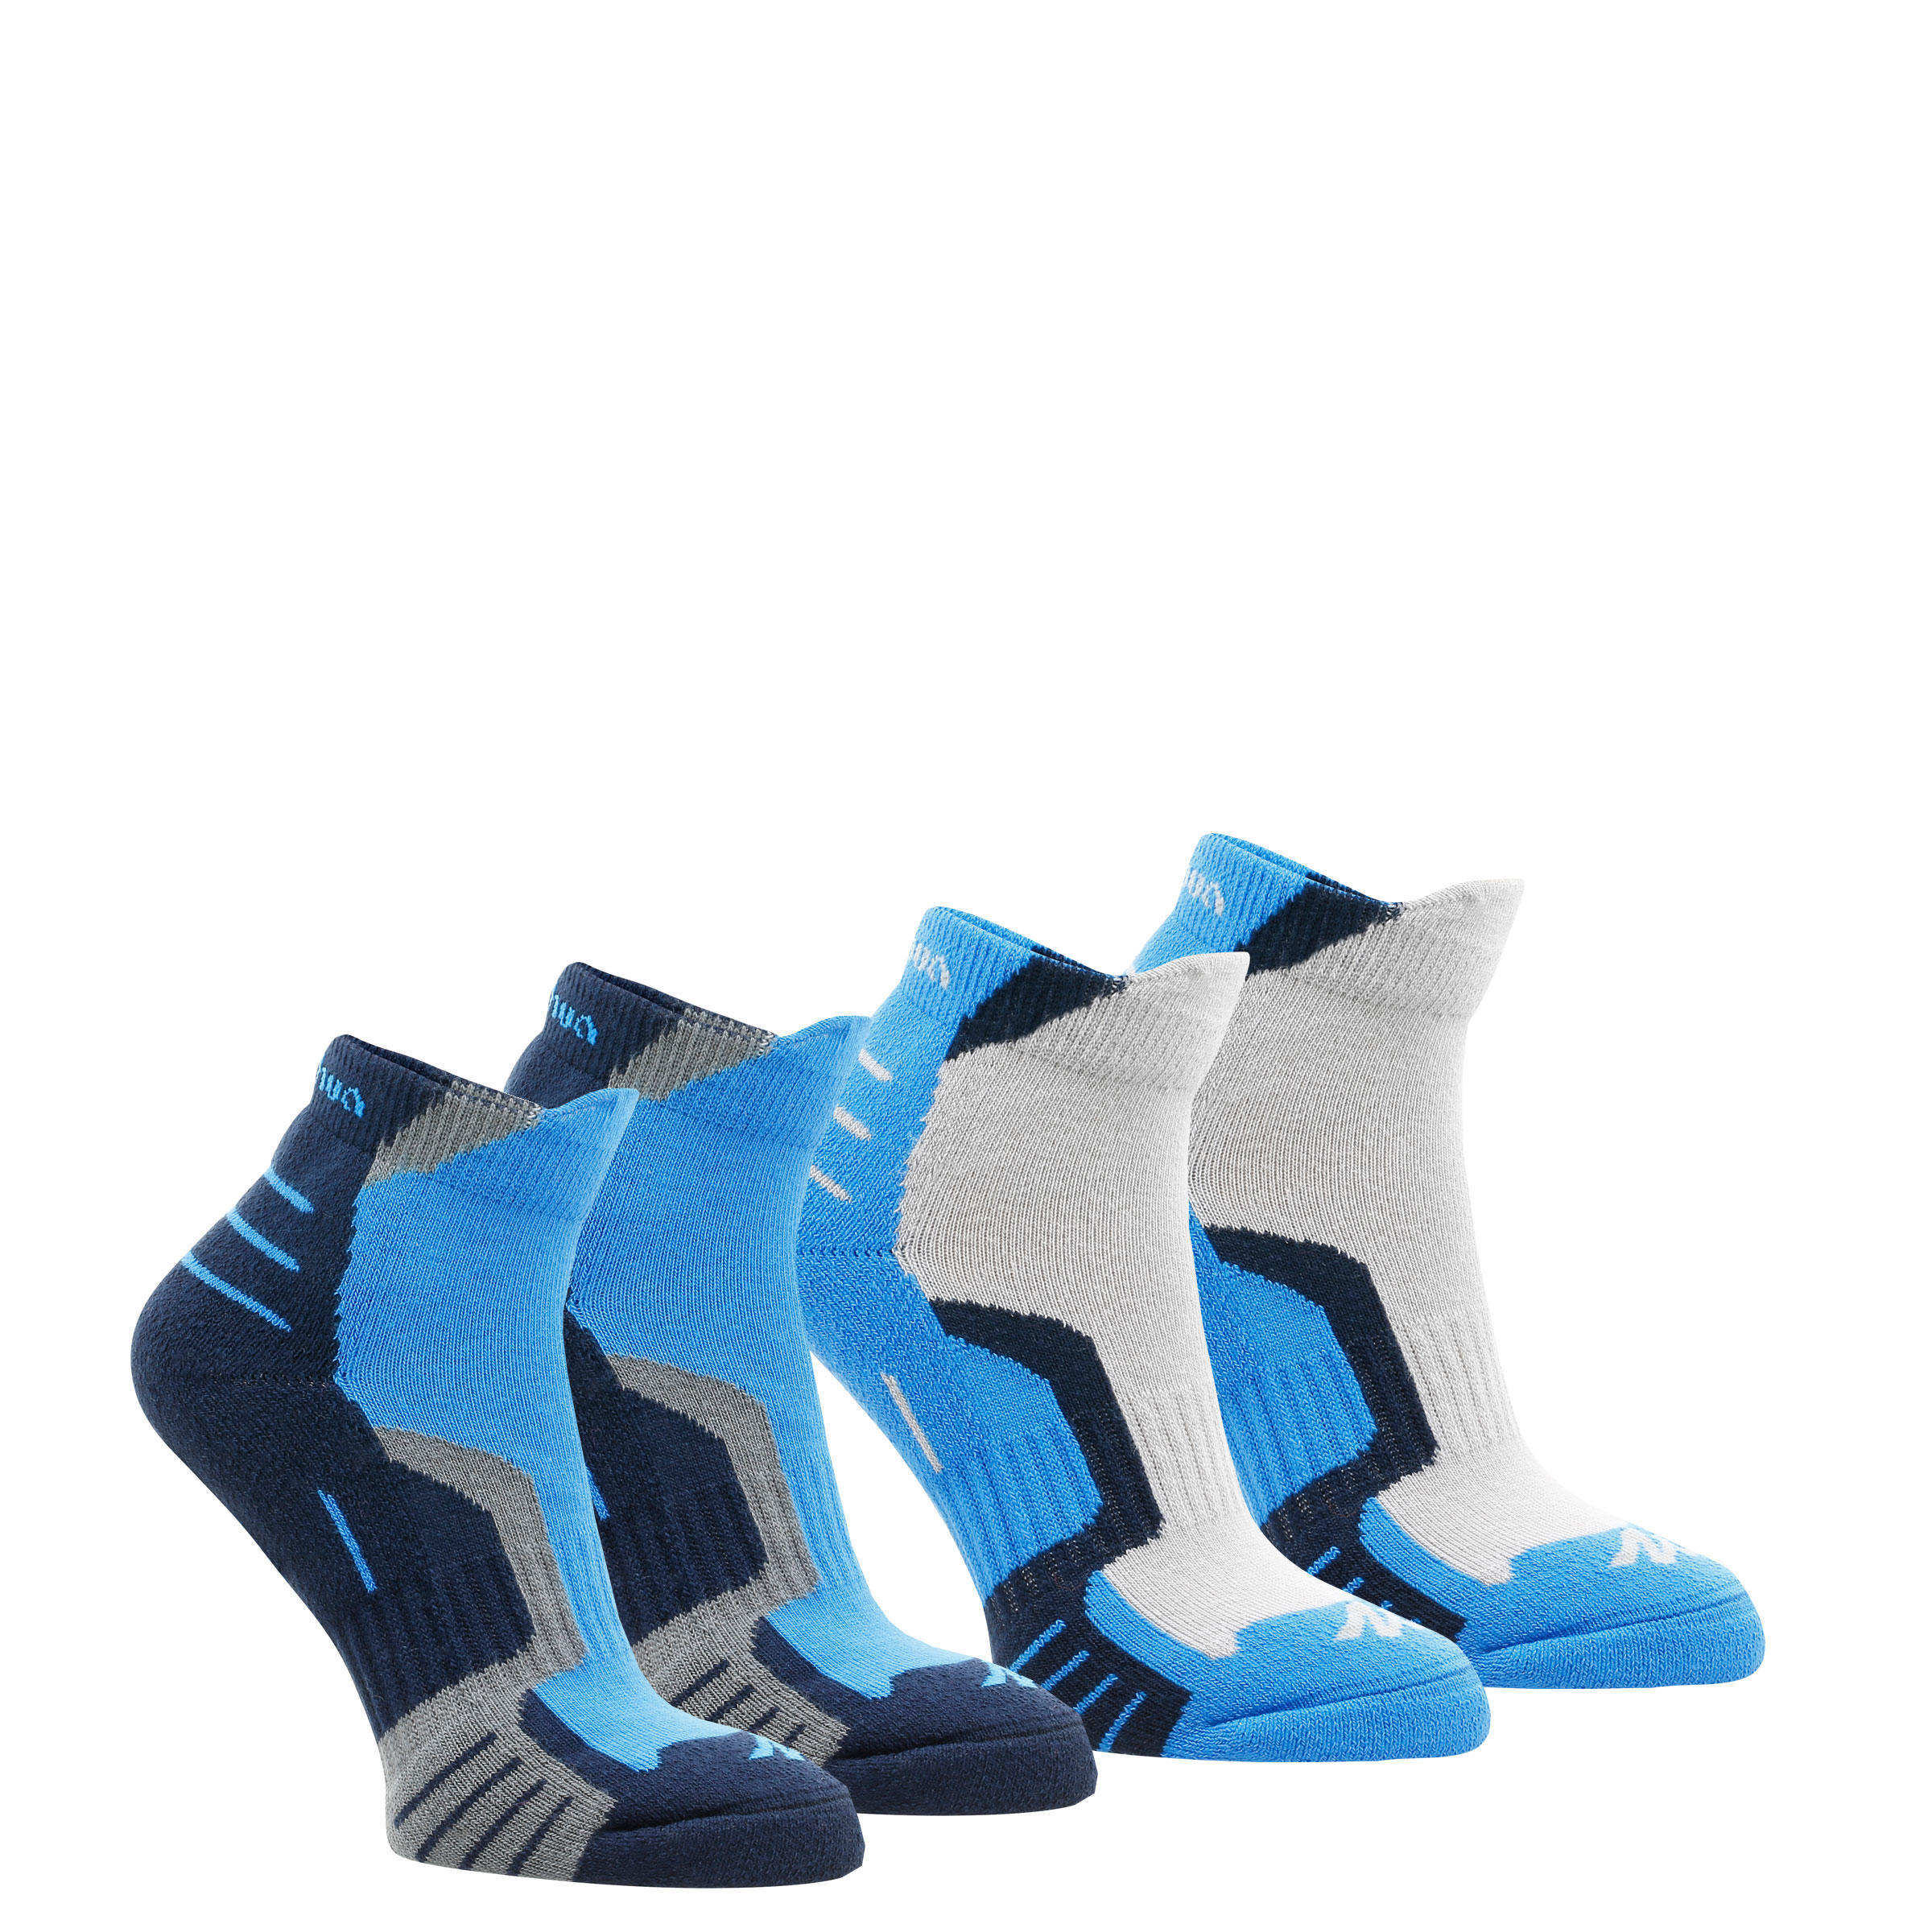 QUECHUA Children's mountain walking socks, 2 pairs, mid height crossocks - Blue